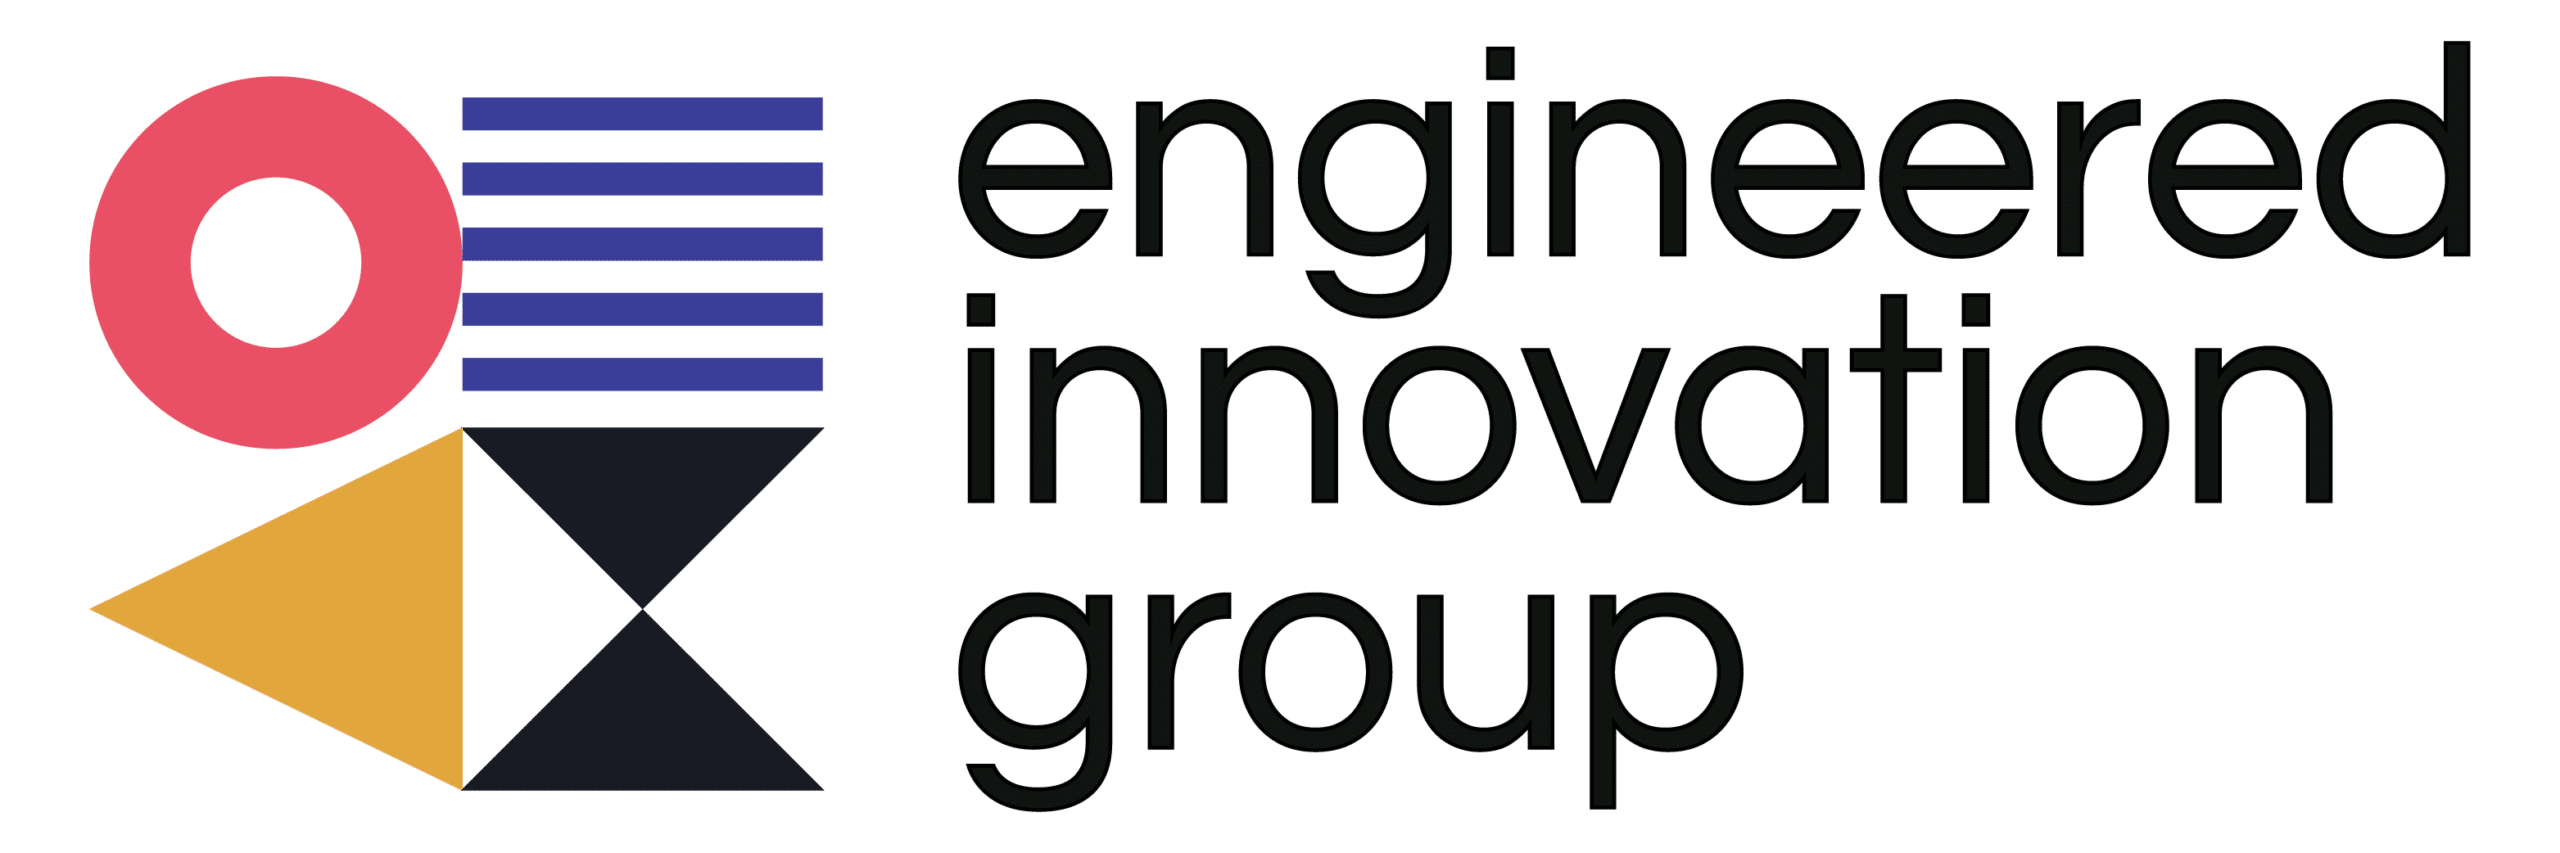 Engineered Innovation Group